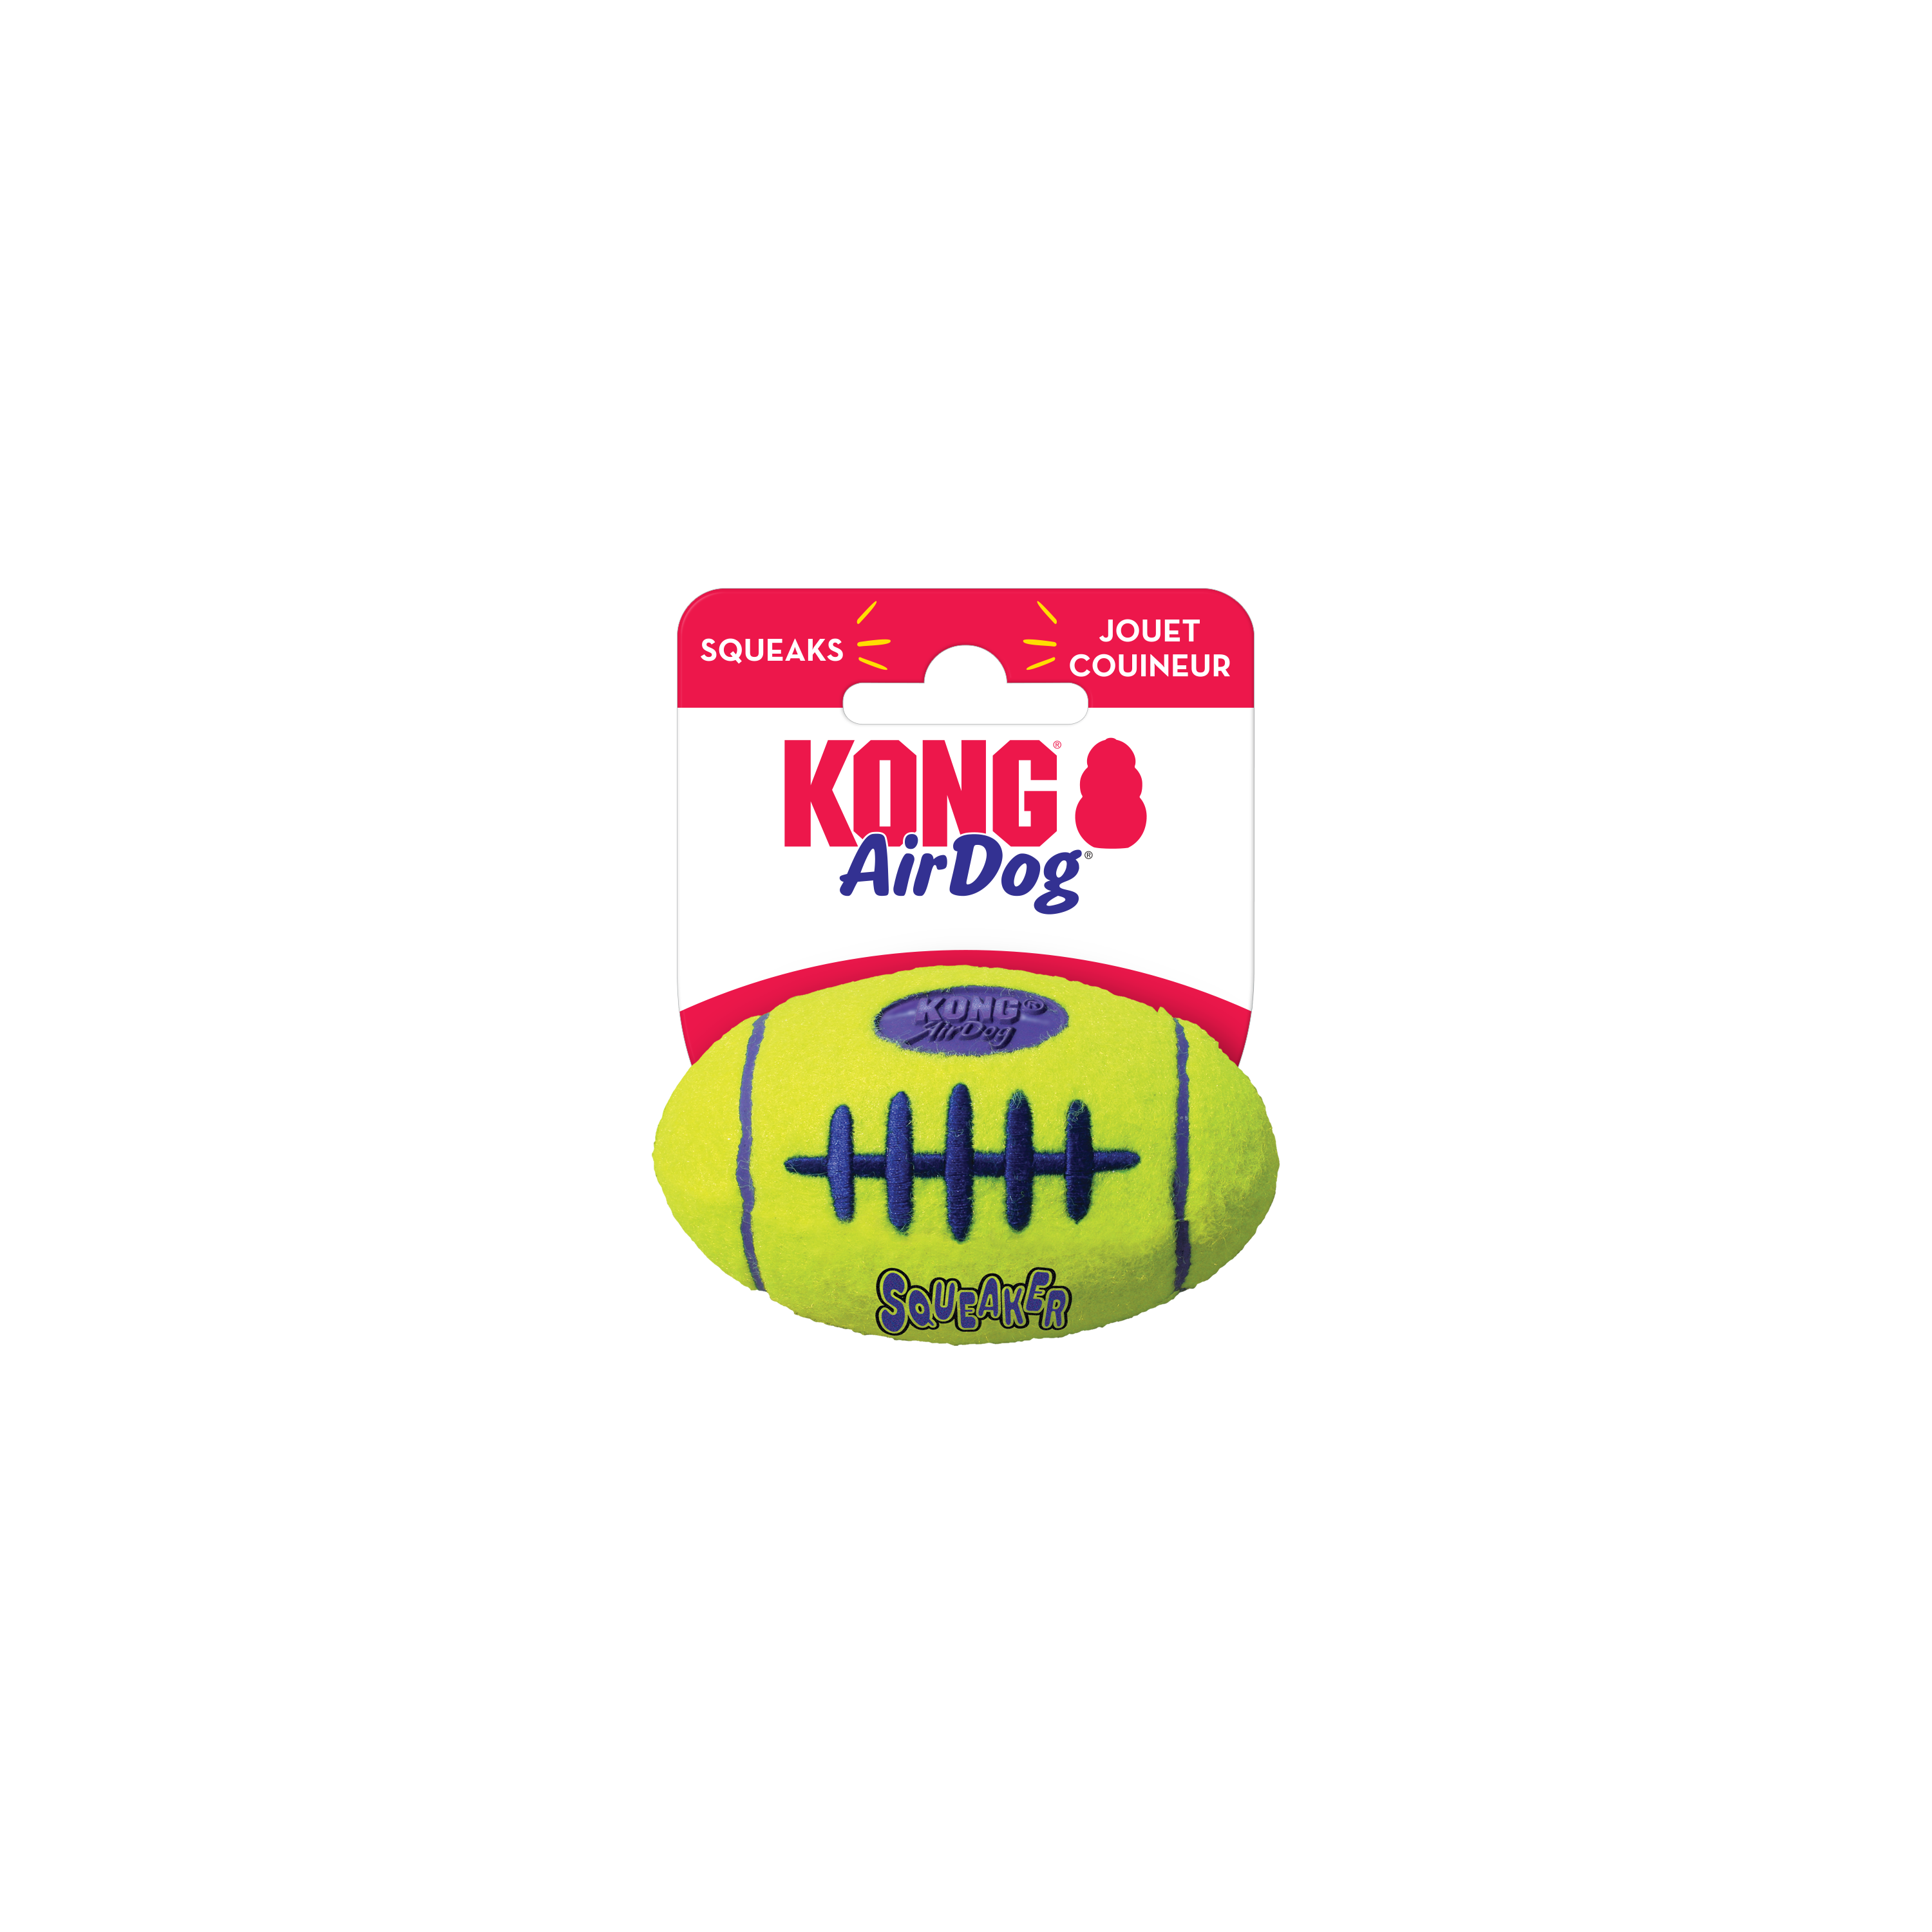 AirDog Squeaker Football onpack product image